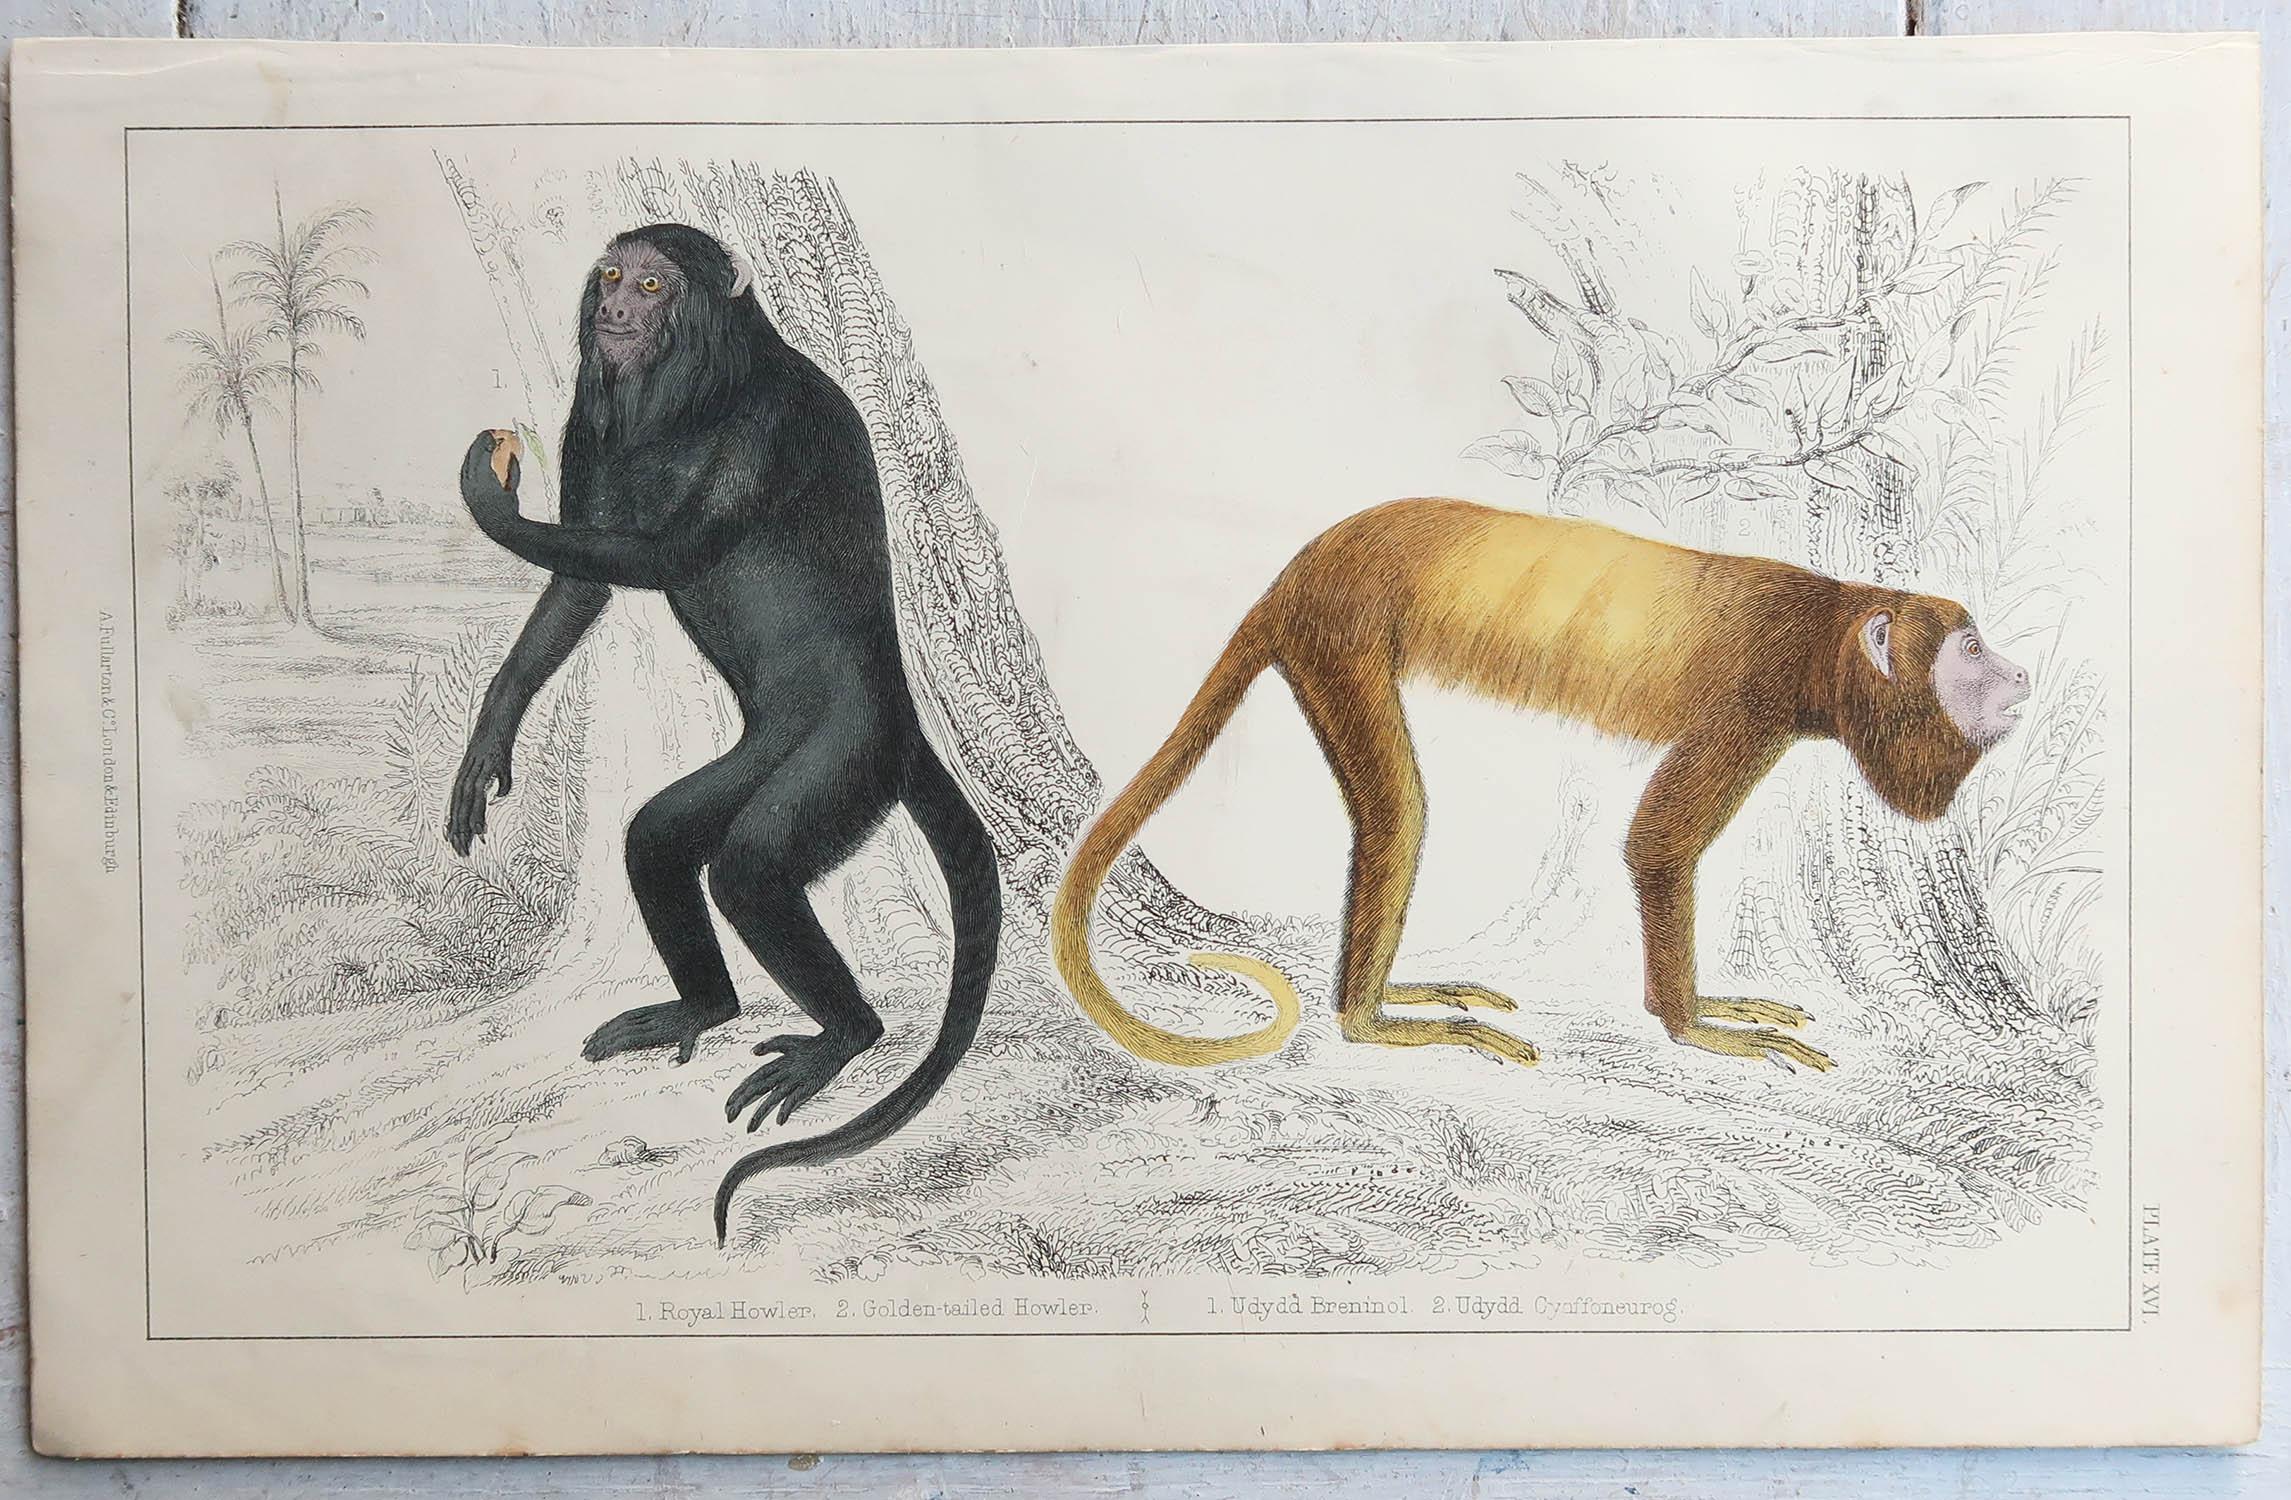 Folk Art Original Antique Print of Monkeys, 1847 'Unframed' For Sale